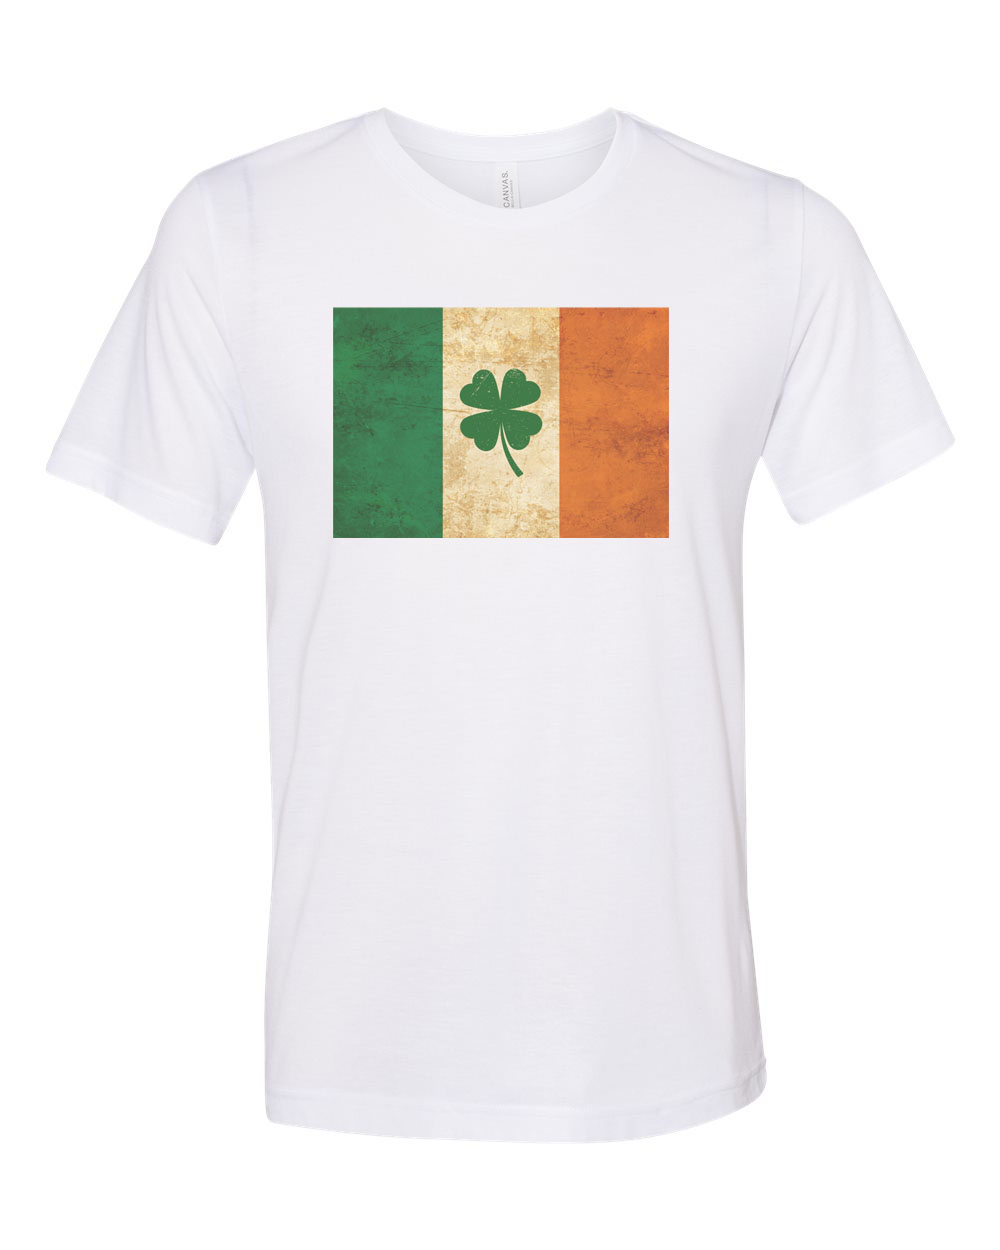 St. Patricks Day Shirt, Shamrock Shirt, Irish Flag, Ireland Shirt, Unisex Fit, Irish Shirt, Shamrock, Irish Flag Shirt, St Patty's Shirt, White, LARGE - image 1 of 1